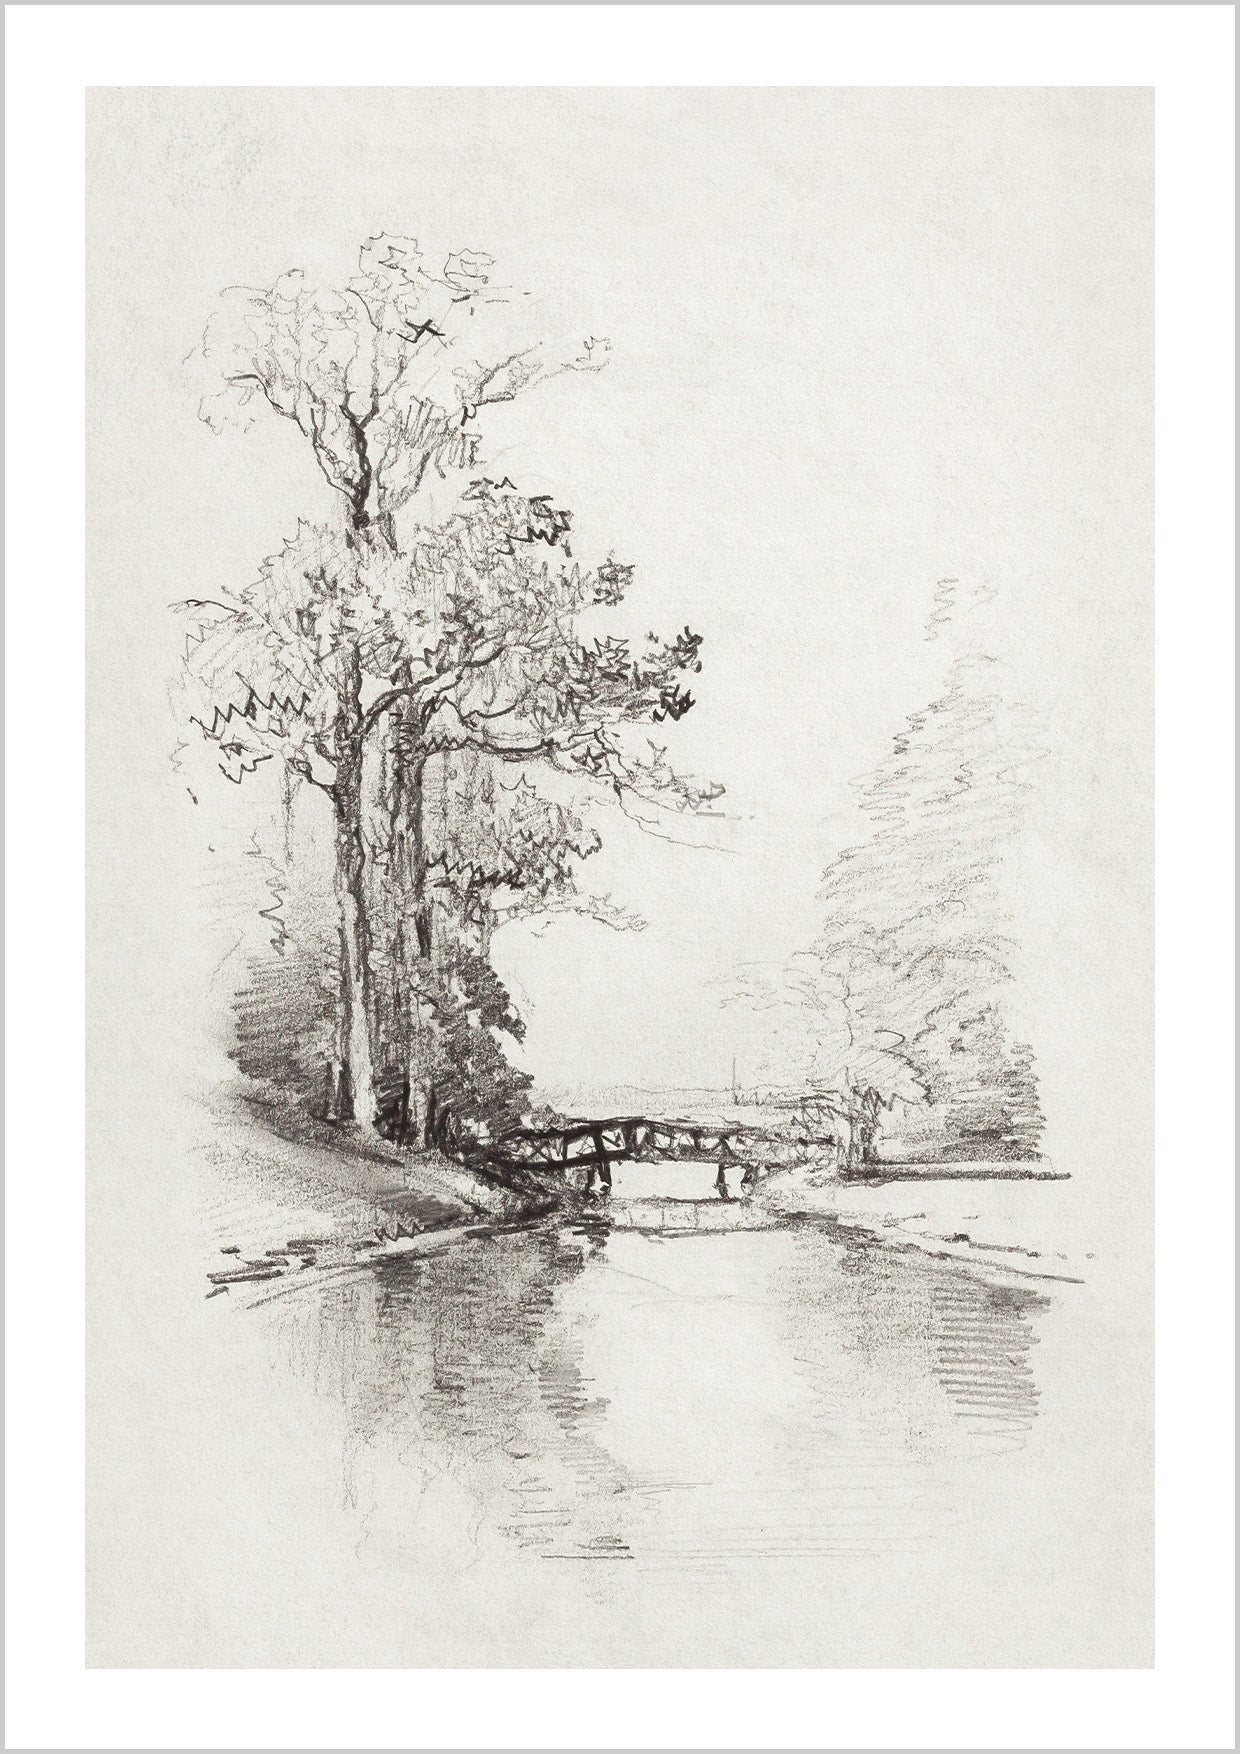 Simple black and white landscape, pine tree, bridge and stream sketch